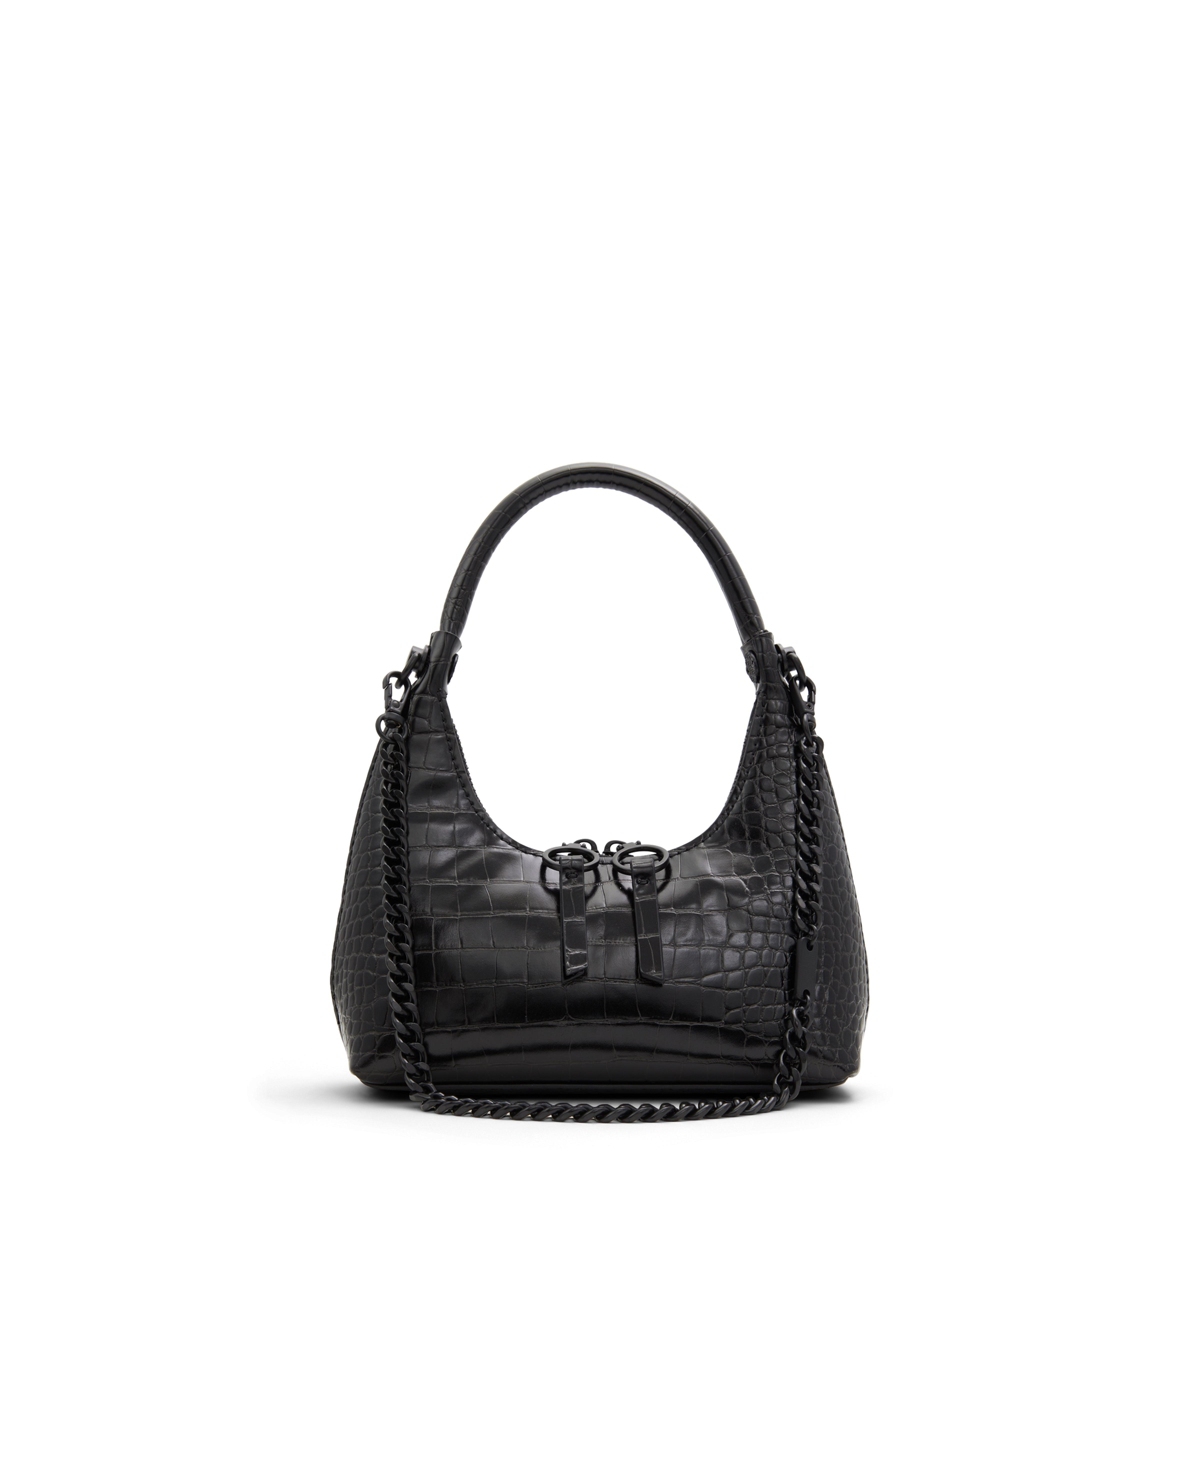 Yvanax Women's City Handbags - Black, Black